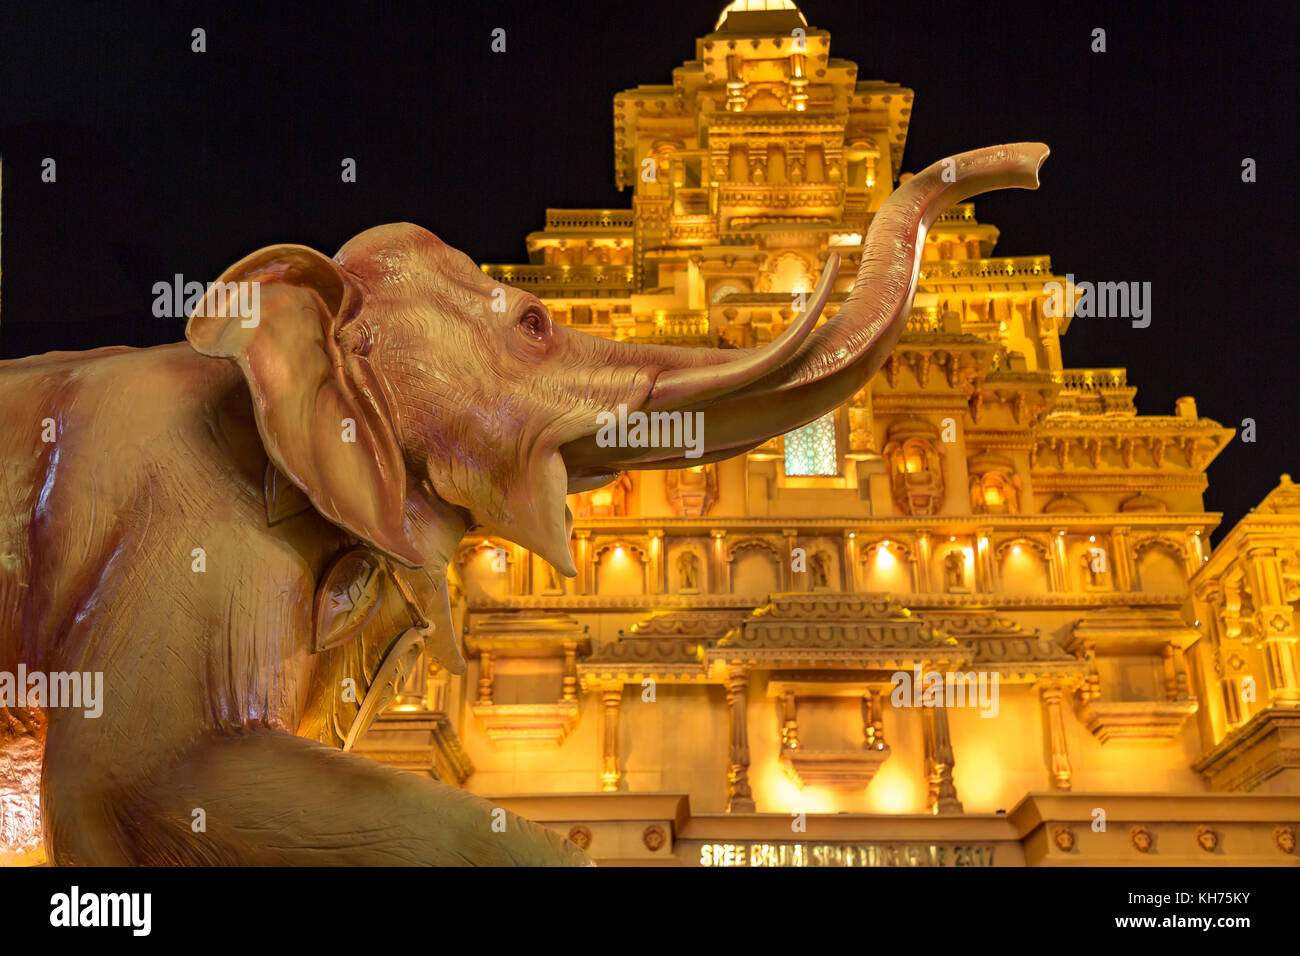 Creative durga tempio costruito per replicare un indiano Royal Palace a Durga puja in nord kolkata Foto Stock